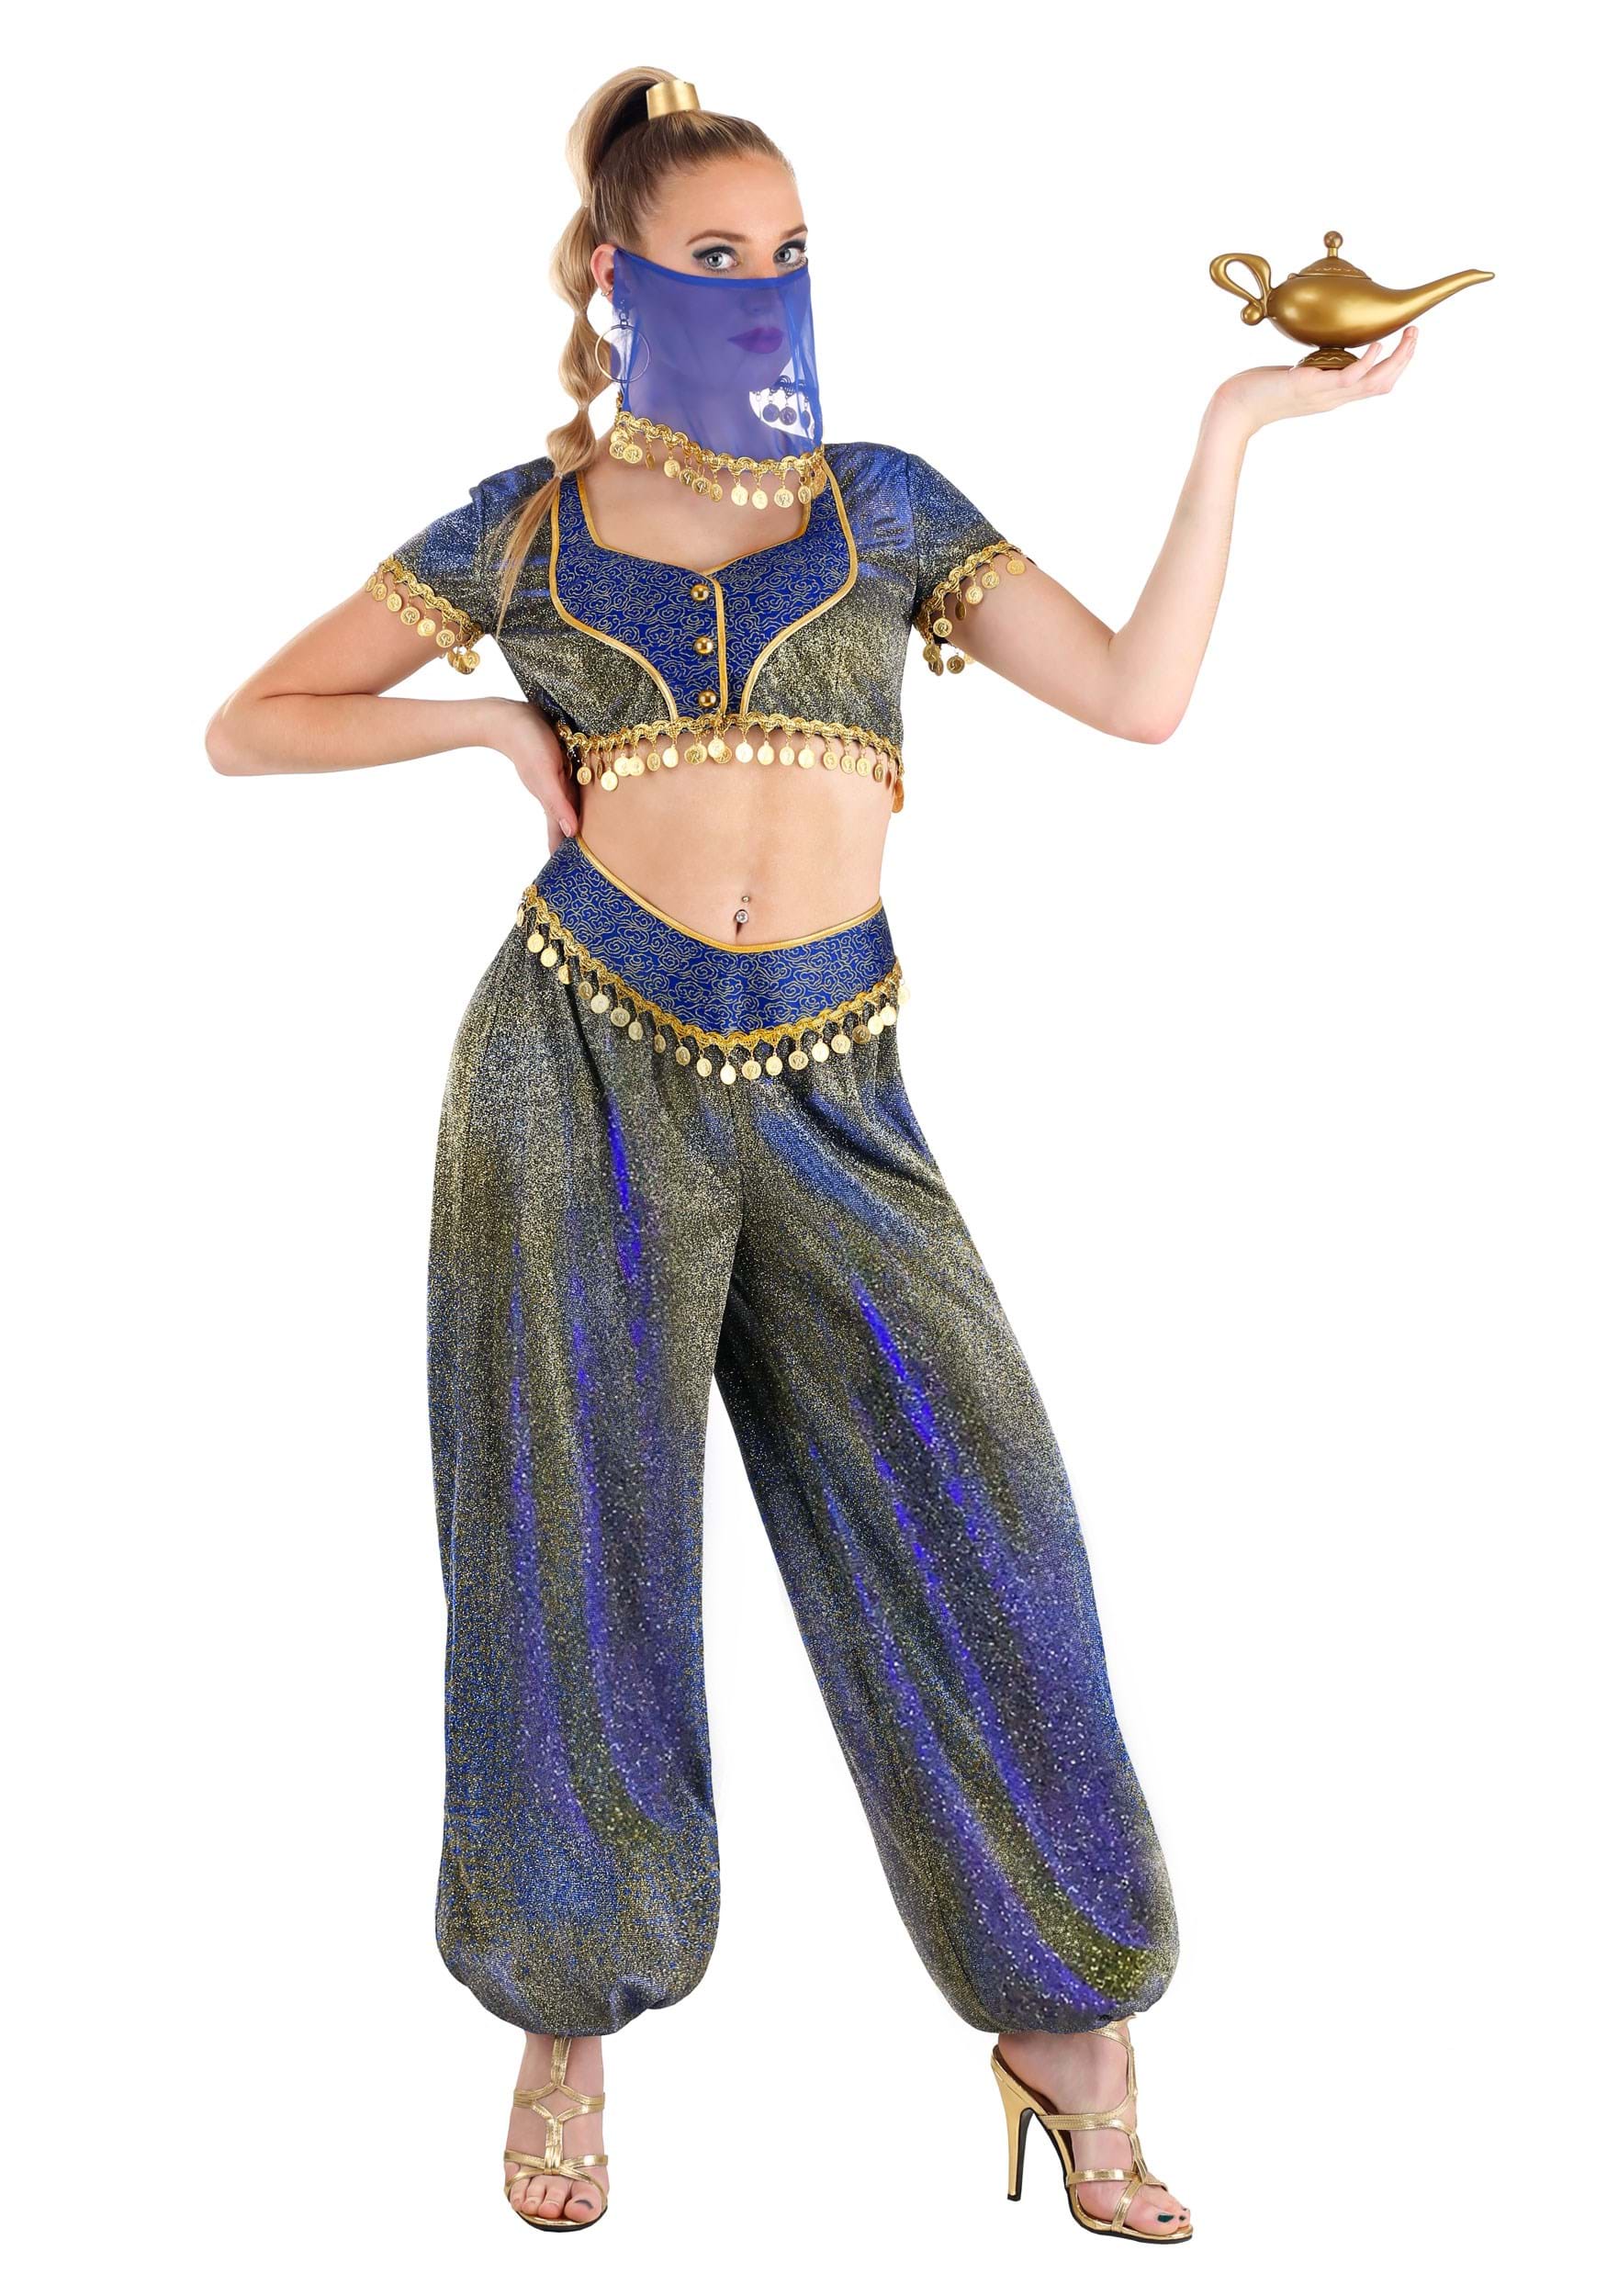 Female Genie Costume in Halloween Costumes 